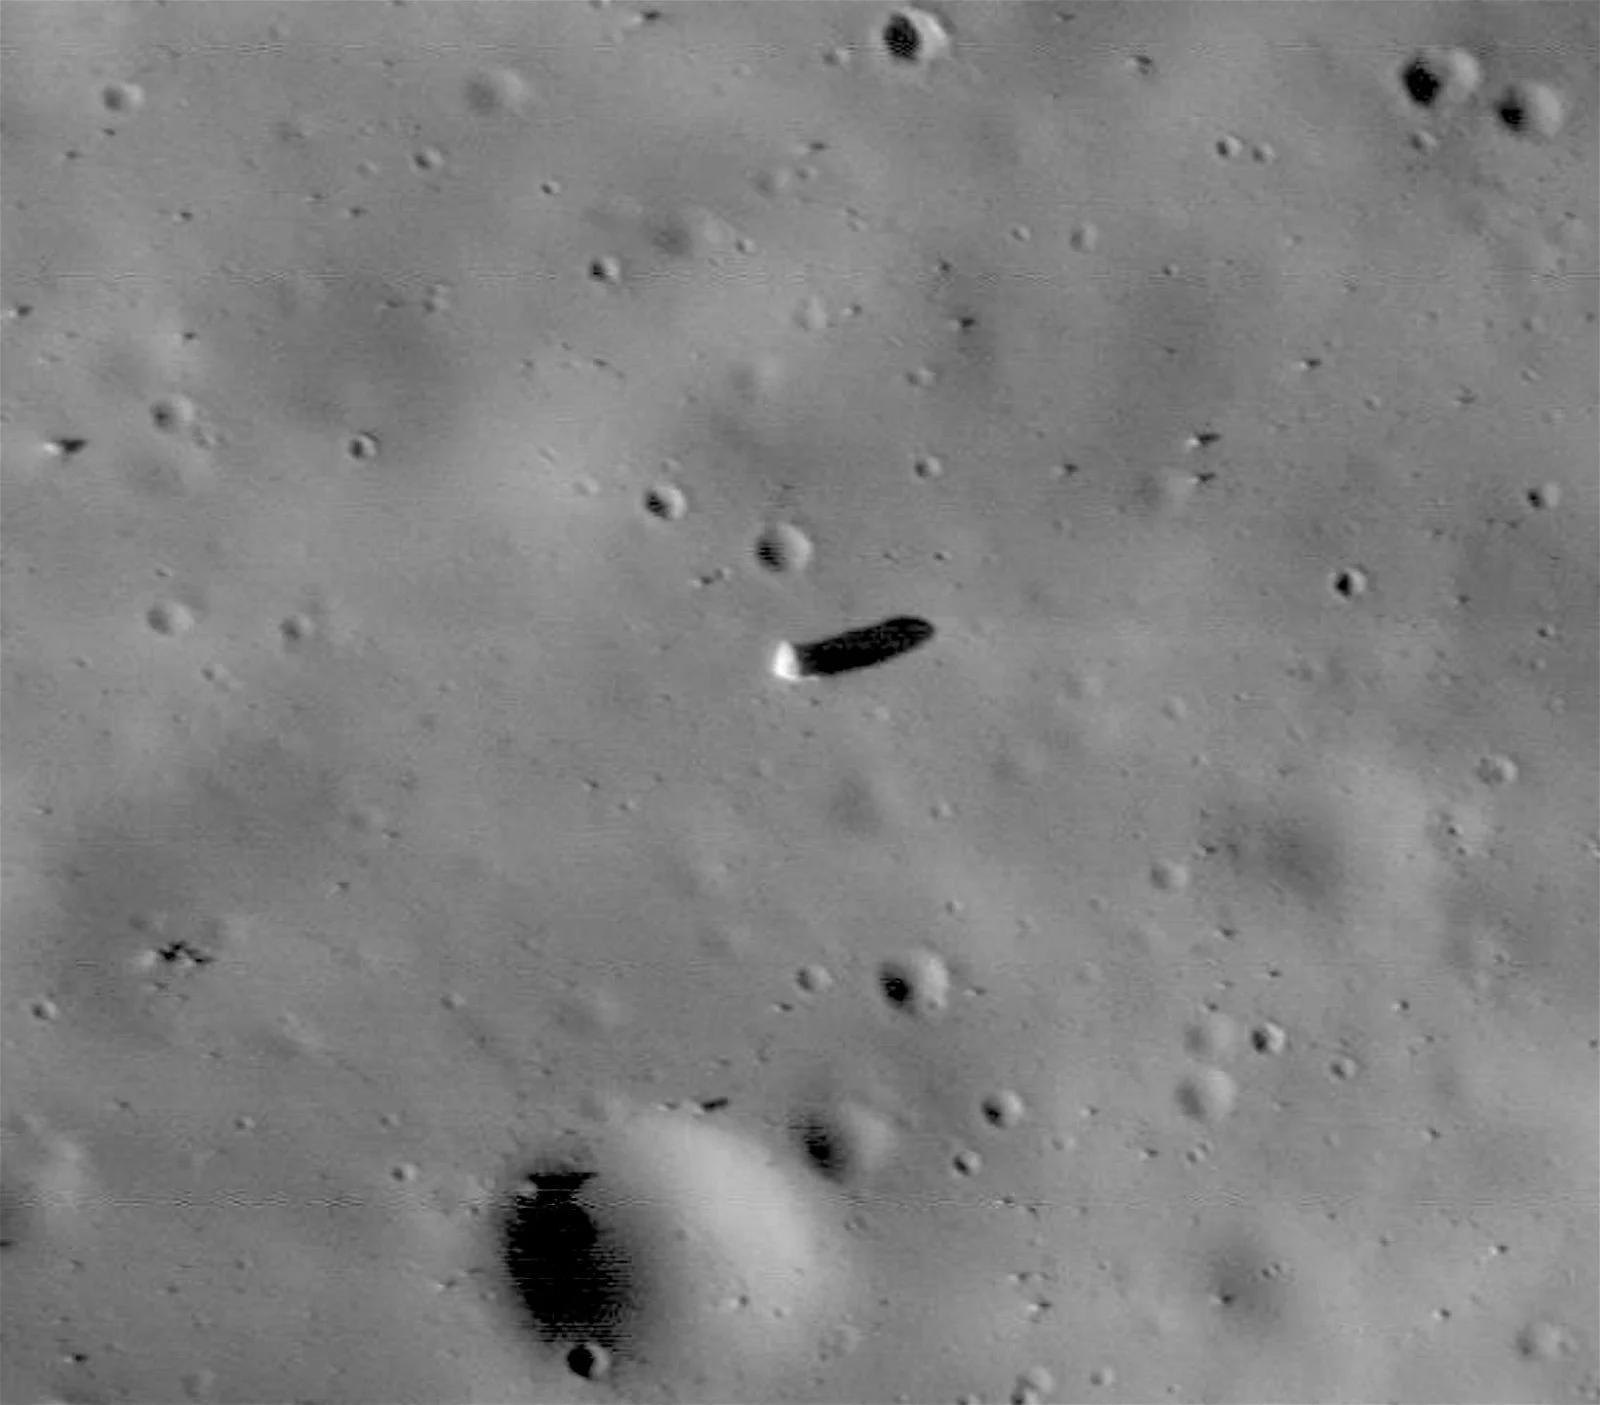 ثبت تصویر شیء مرموز در آسمان مریخ!/ عکس